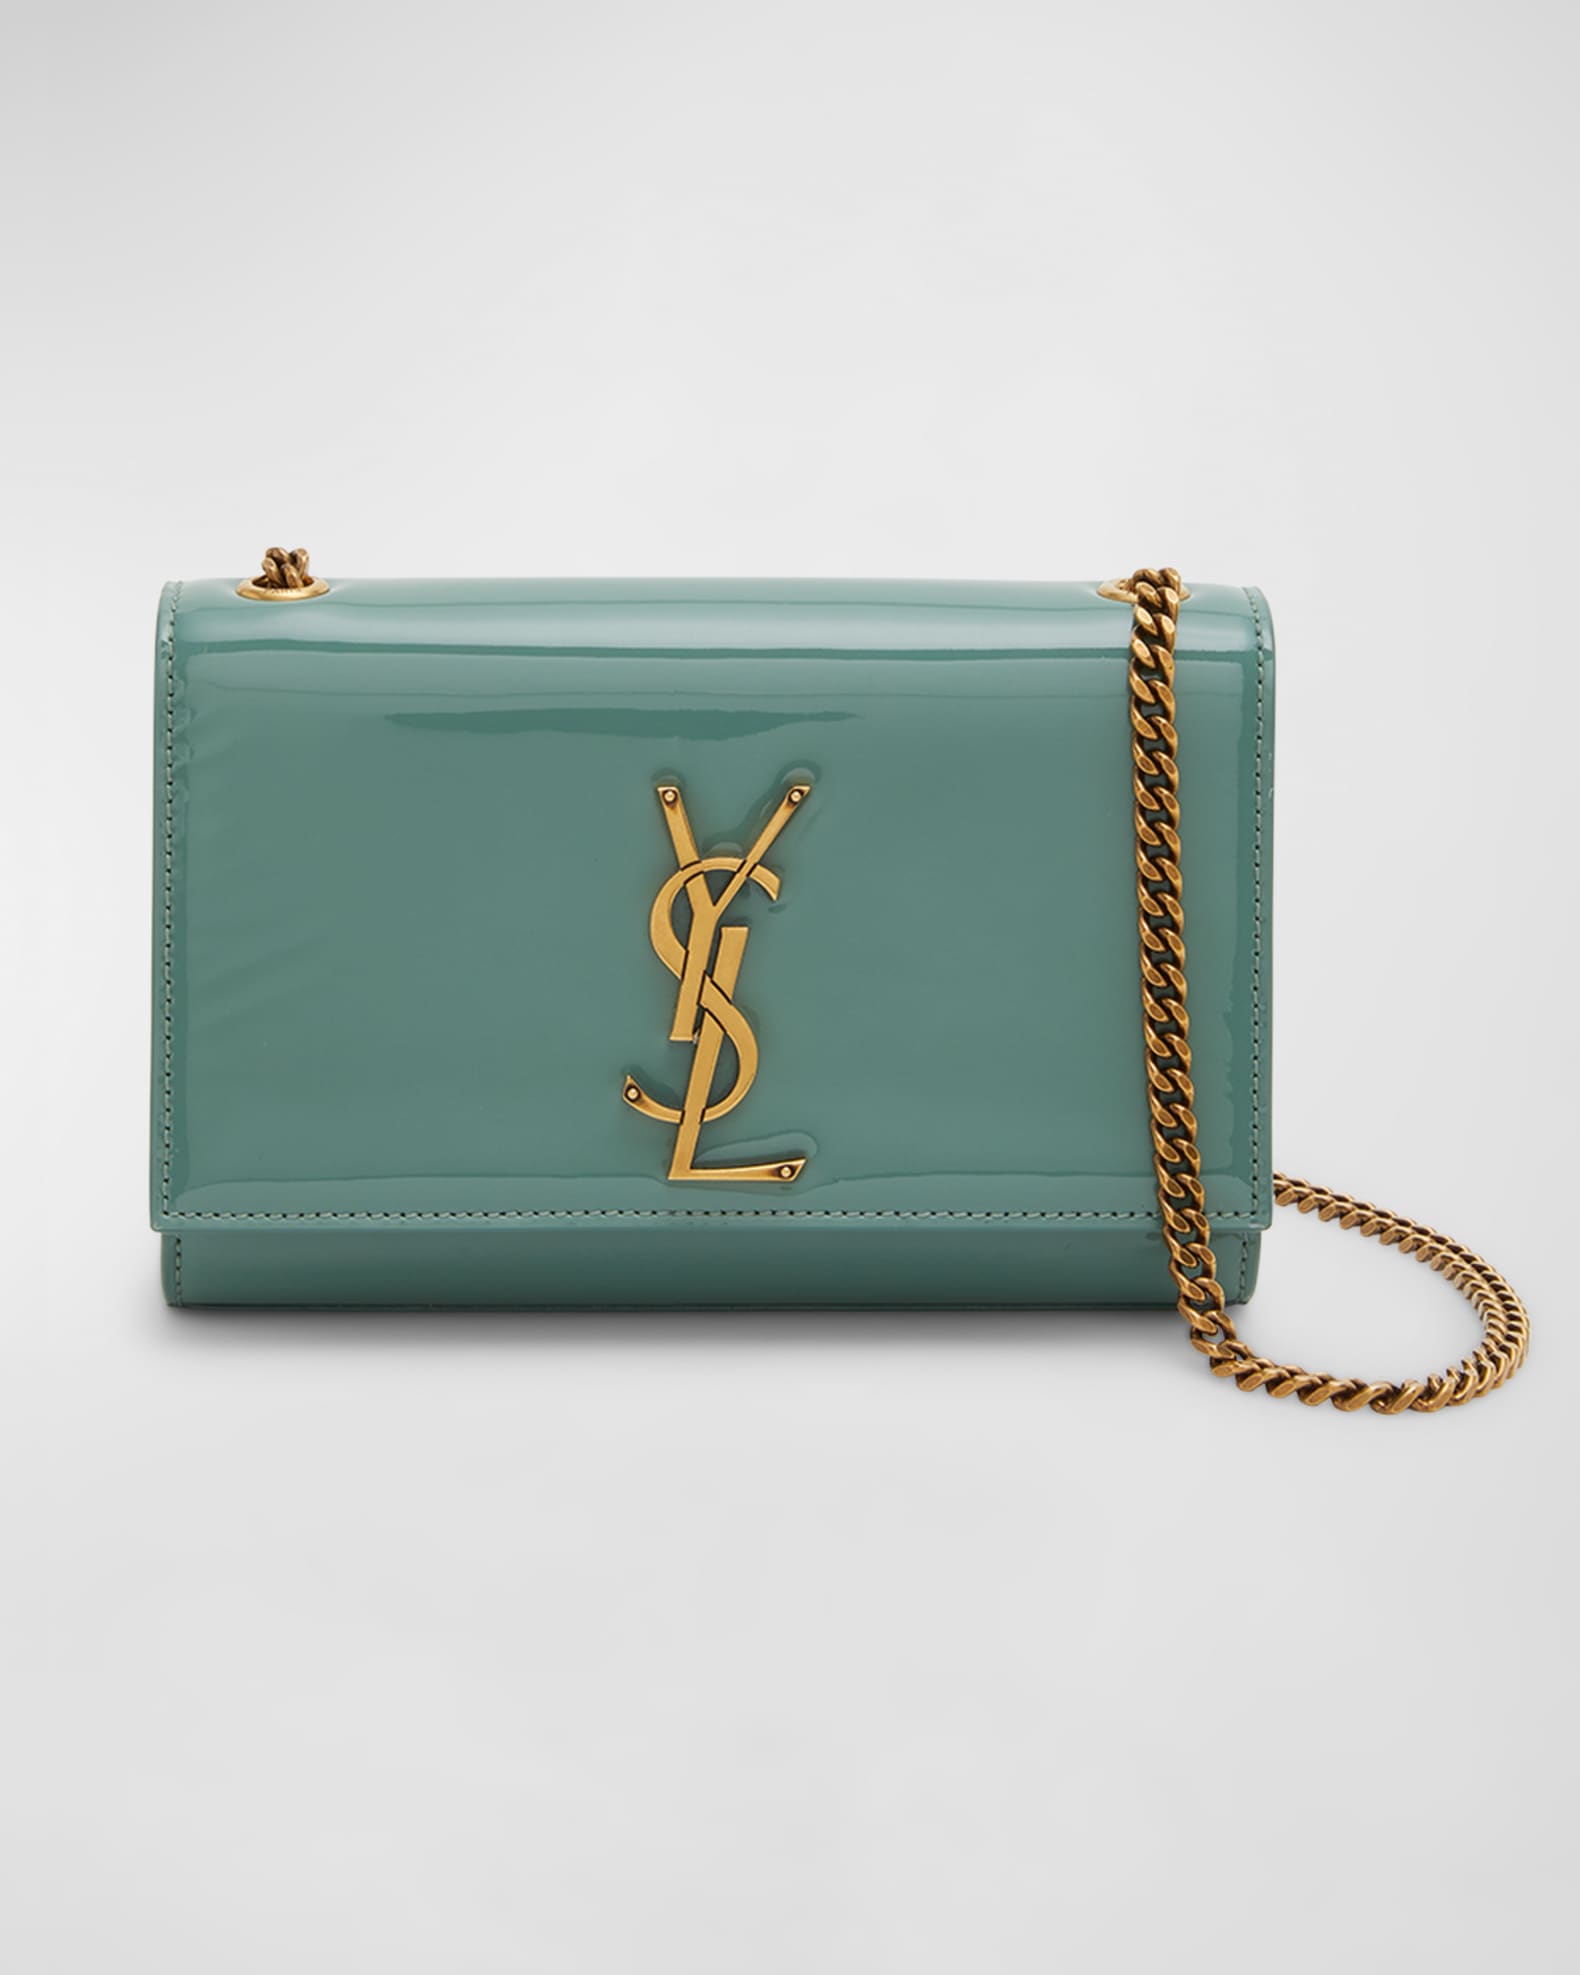 Monogram cabas leather handbag Saint Laurent Green in Leather